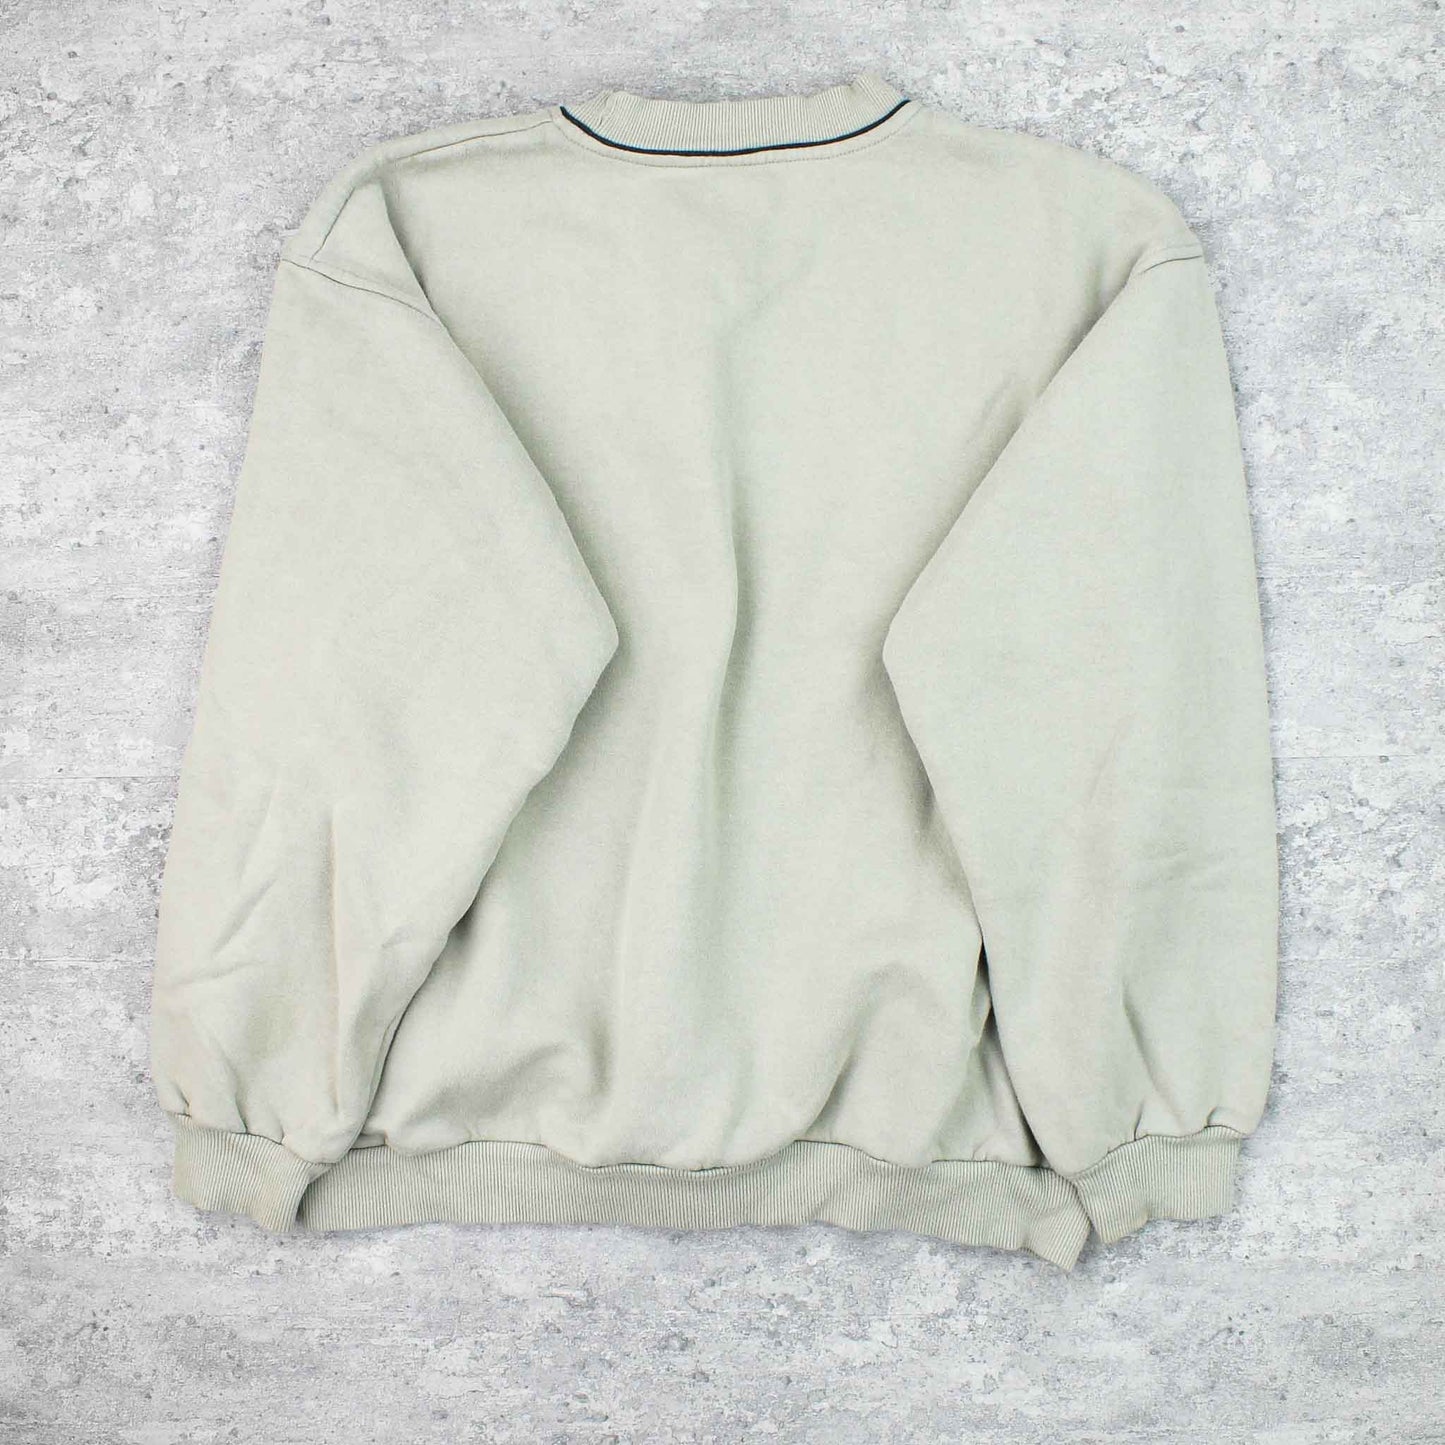 Vintage Fila Spellout Sweater Beige - M